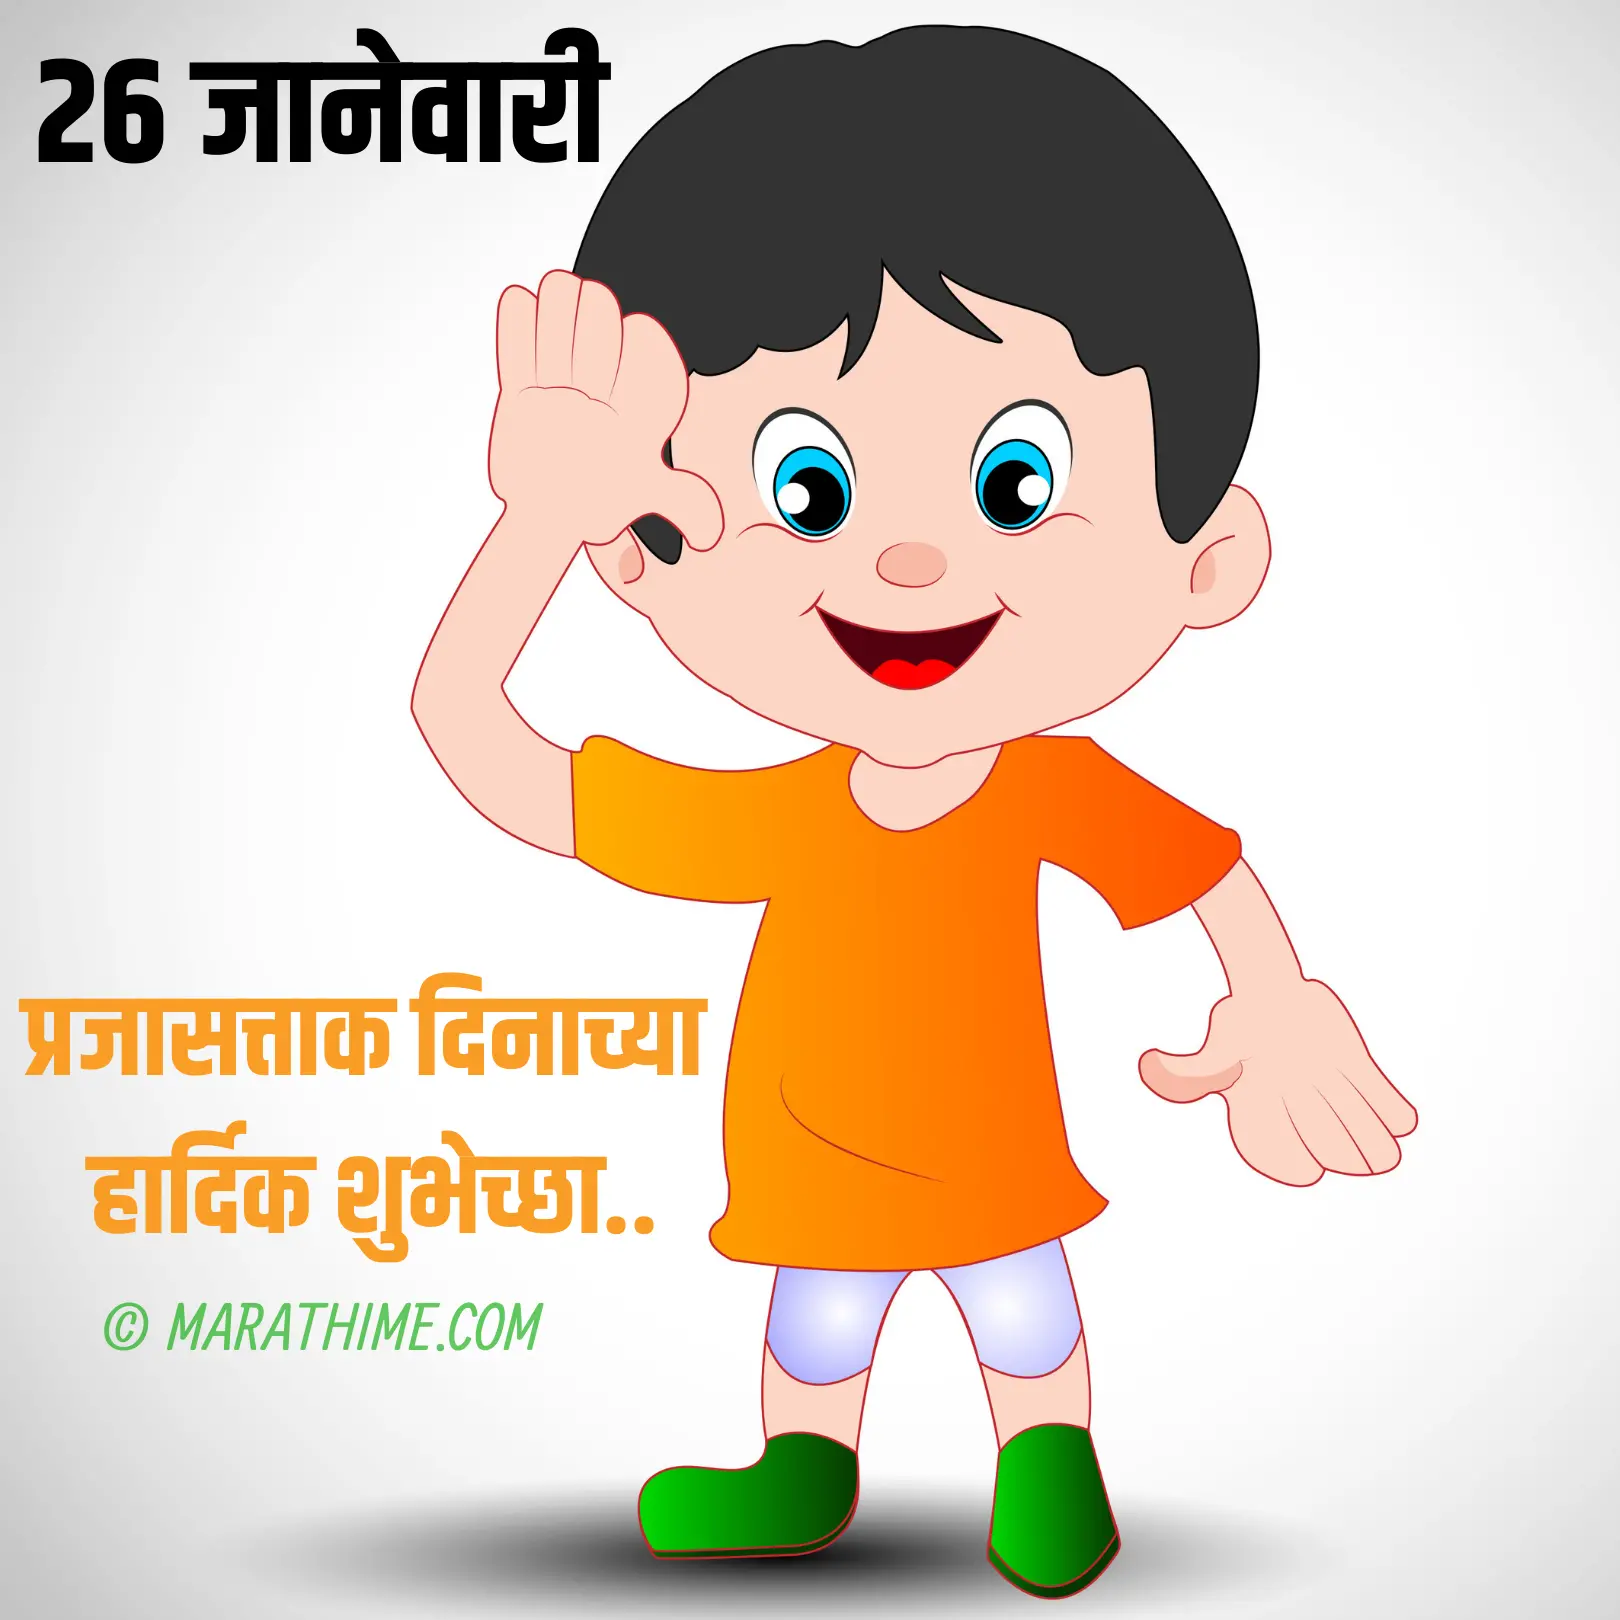 प्रजासत्ताक दिन शुभेच्छा-republic day quotes in marathi (20)